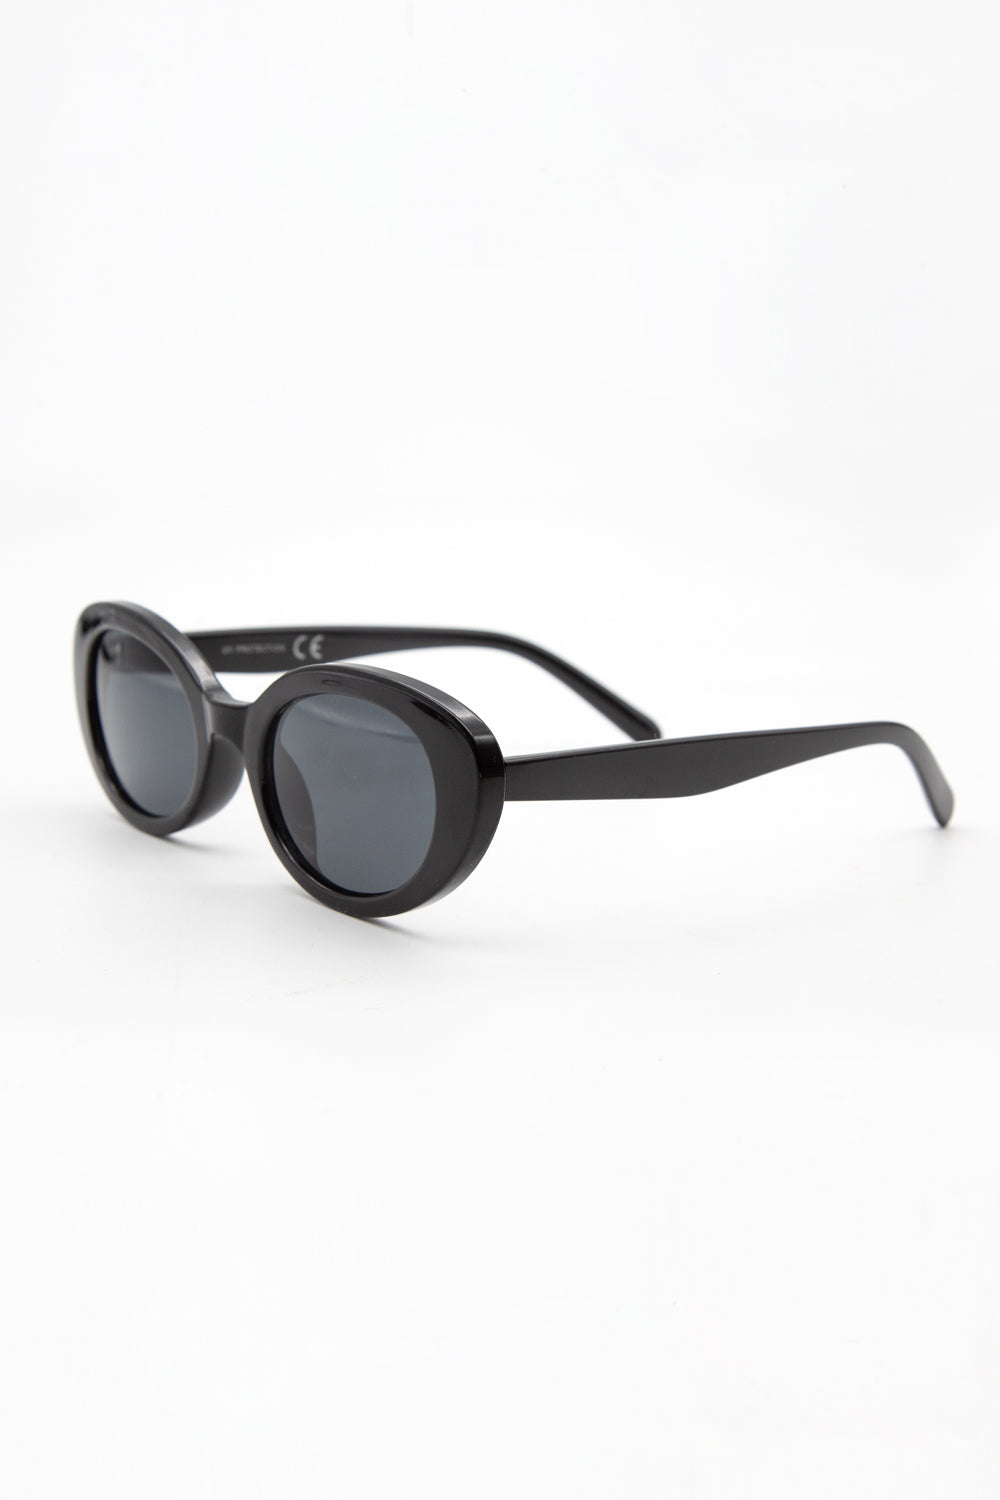 Retro Black Sunglasses With UV Protection